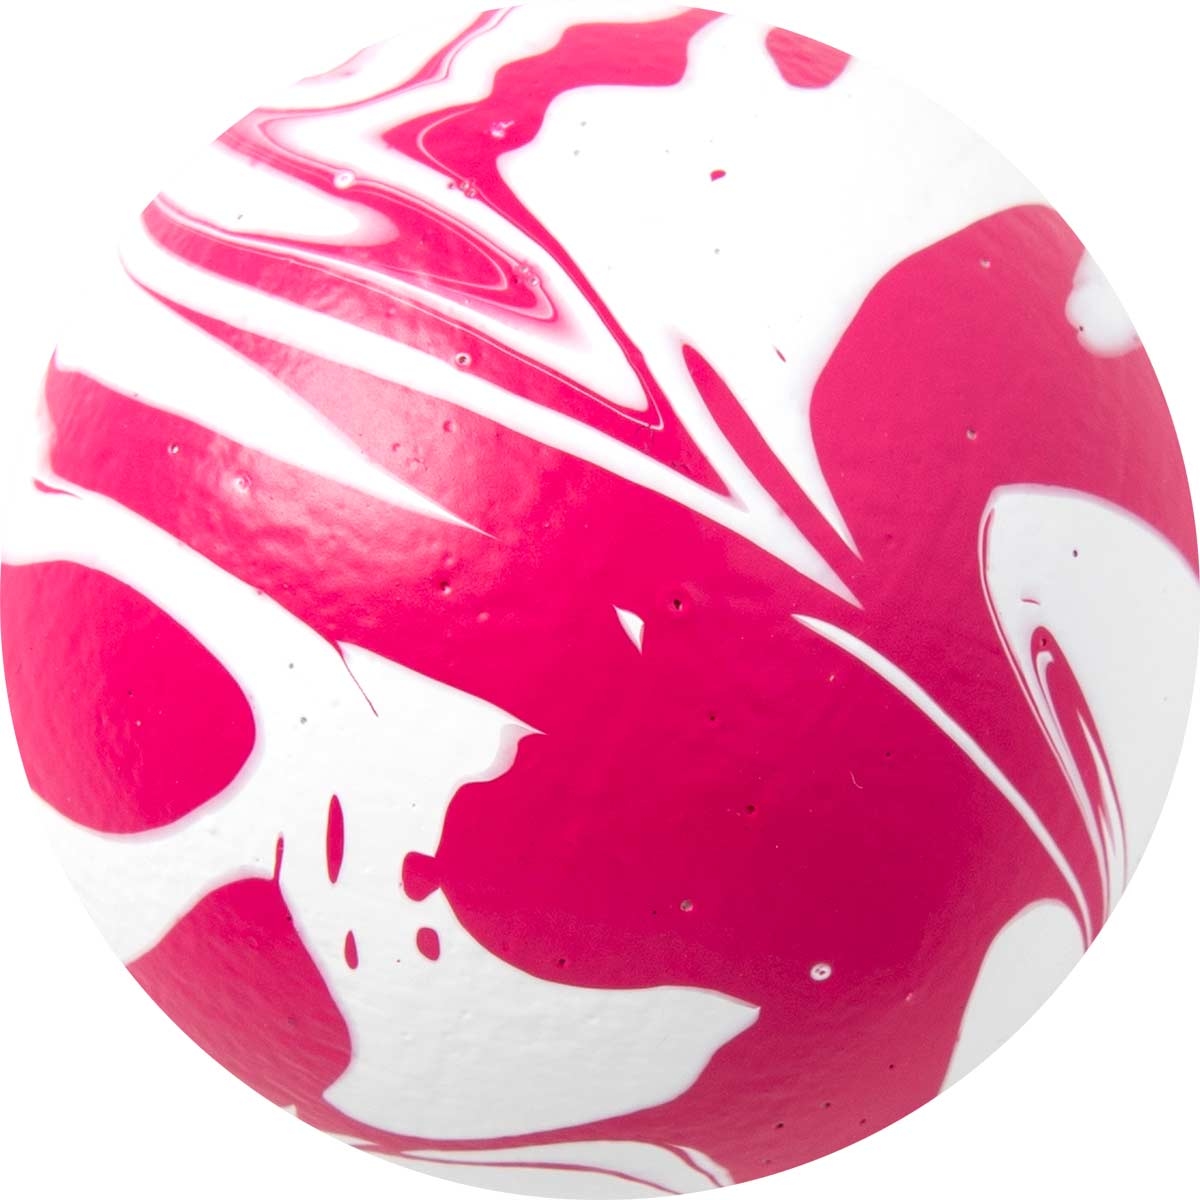 FolkArt 16923 Marbling paint Hot Pink